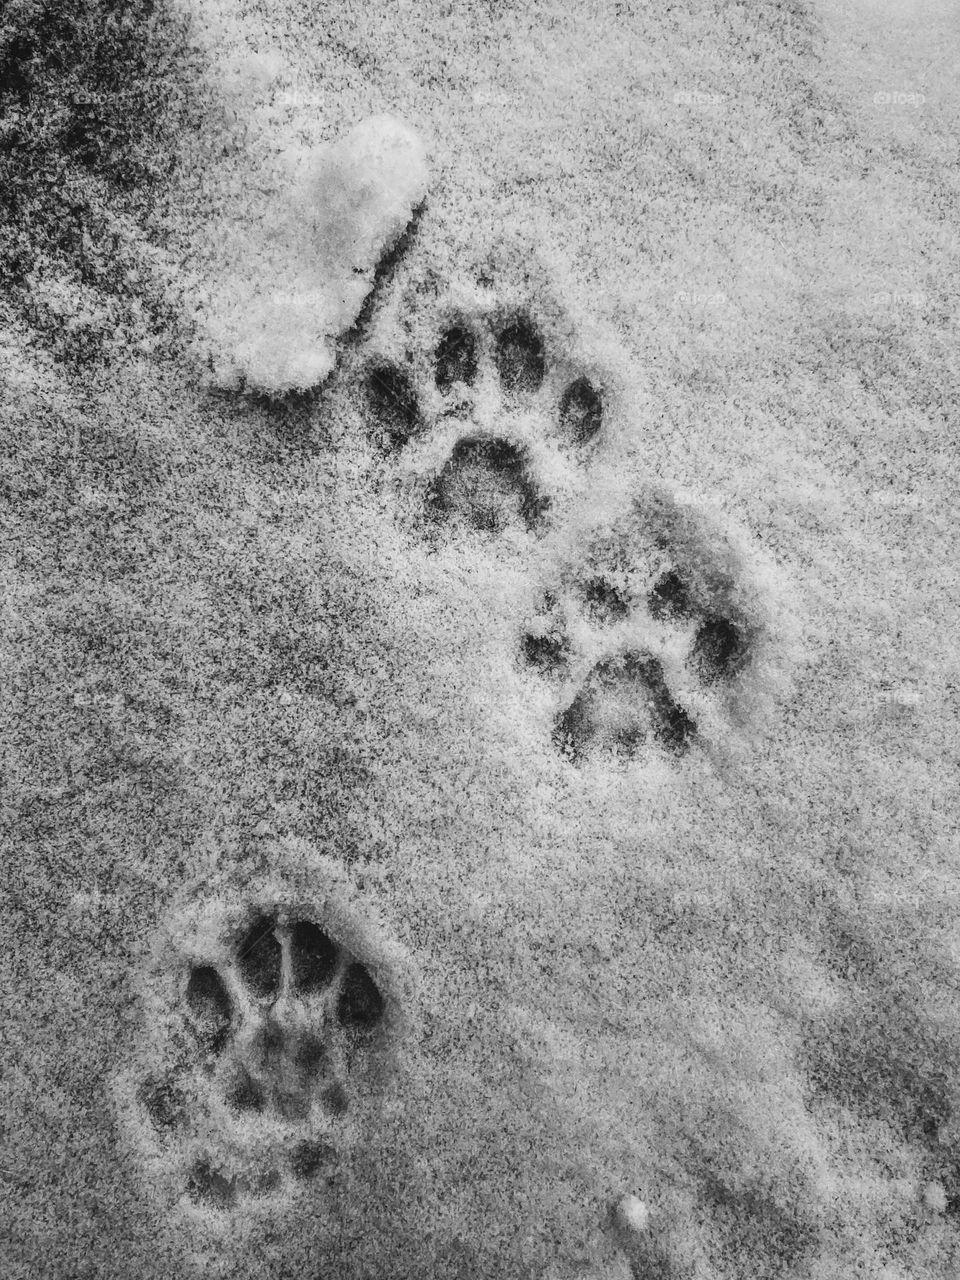 Cat prints in snow